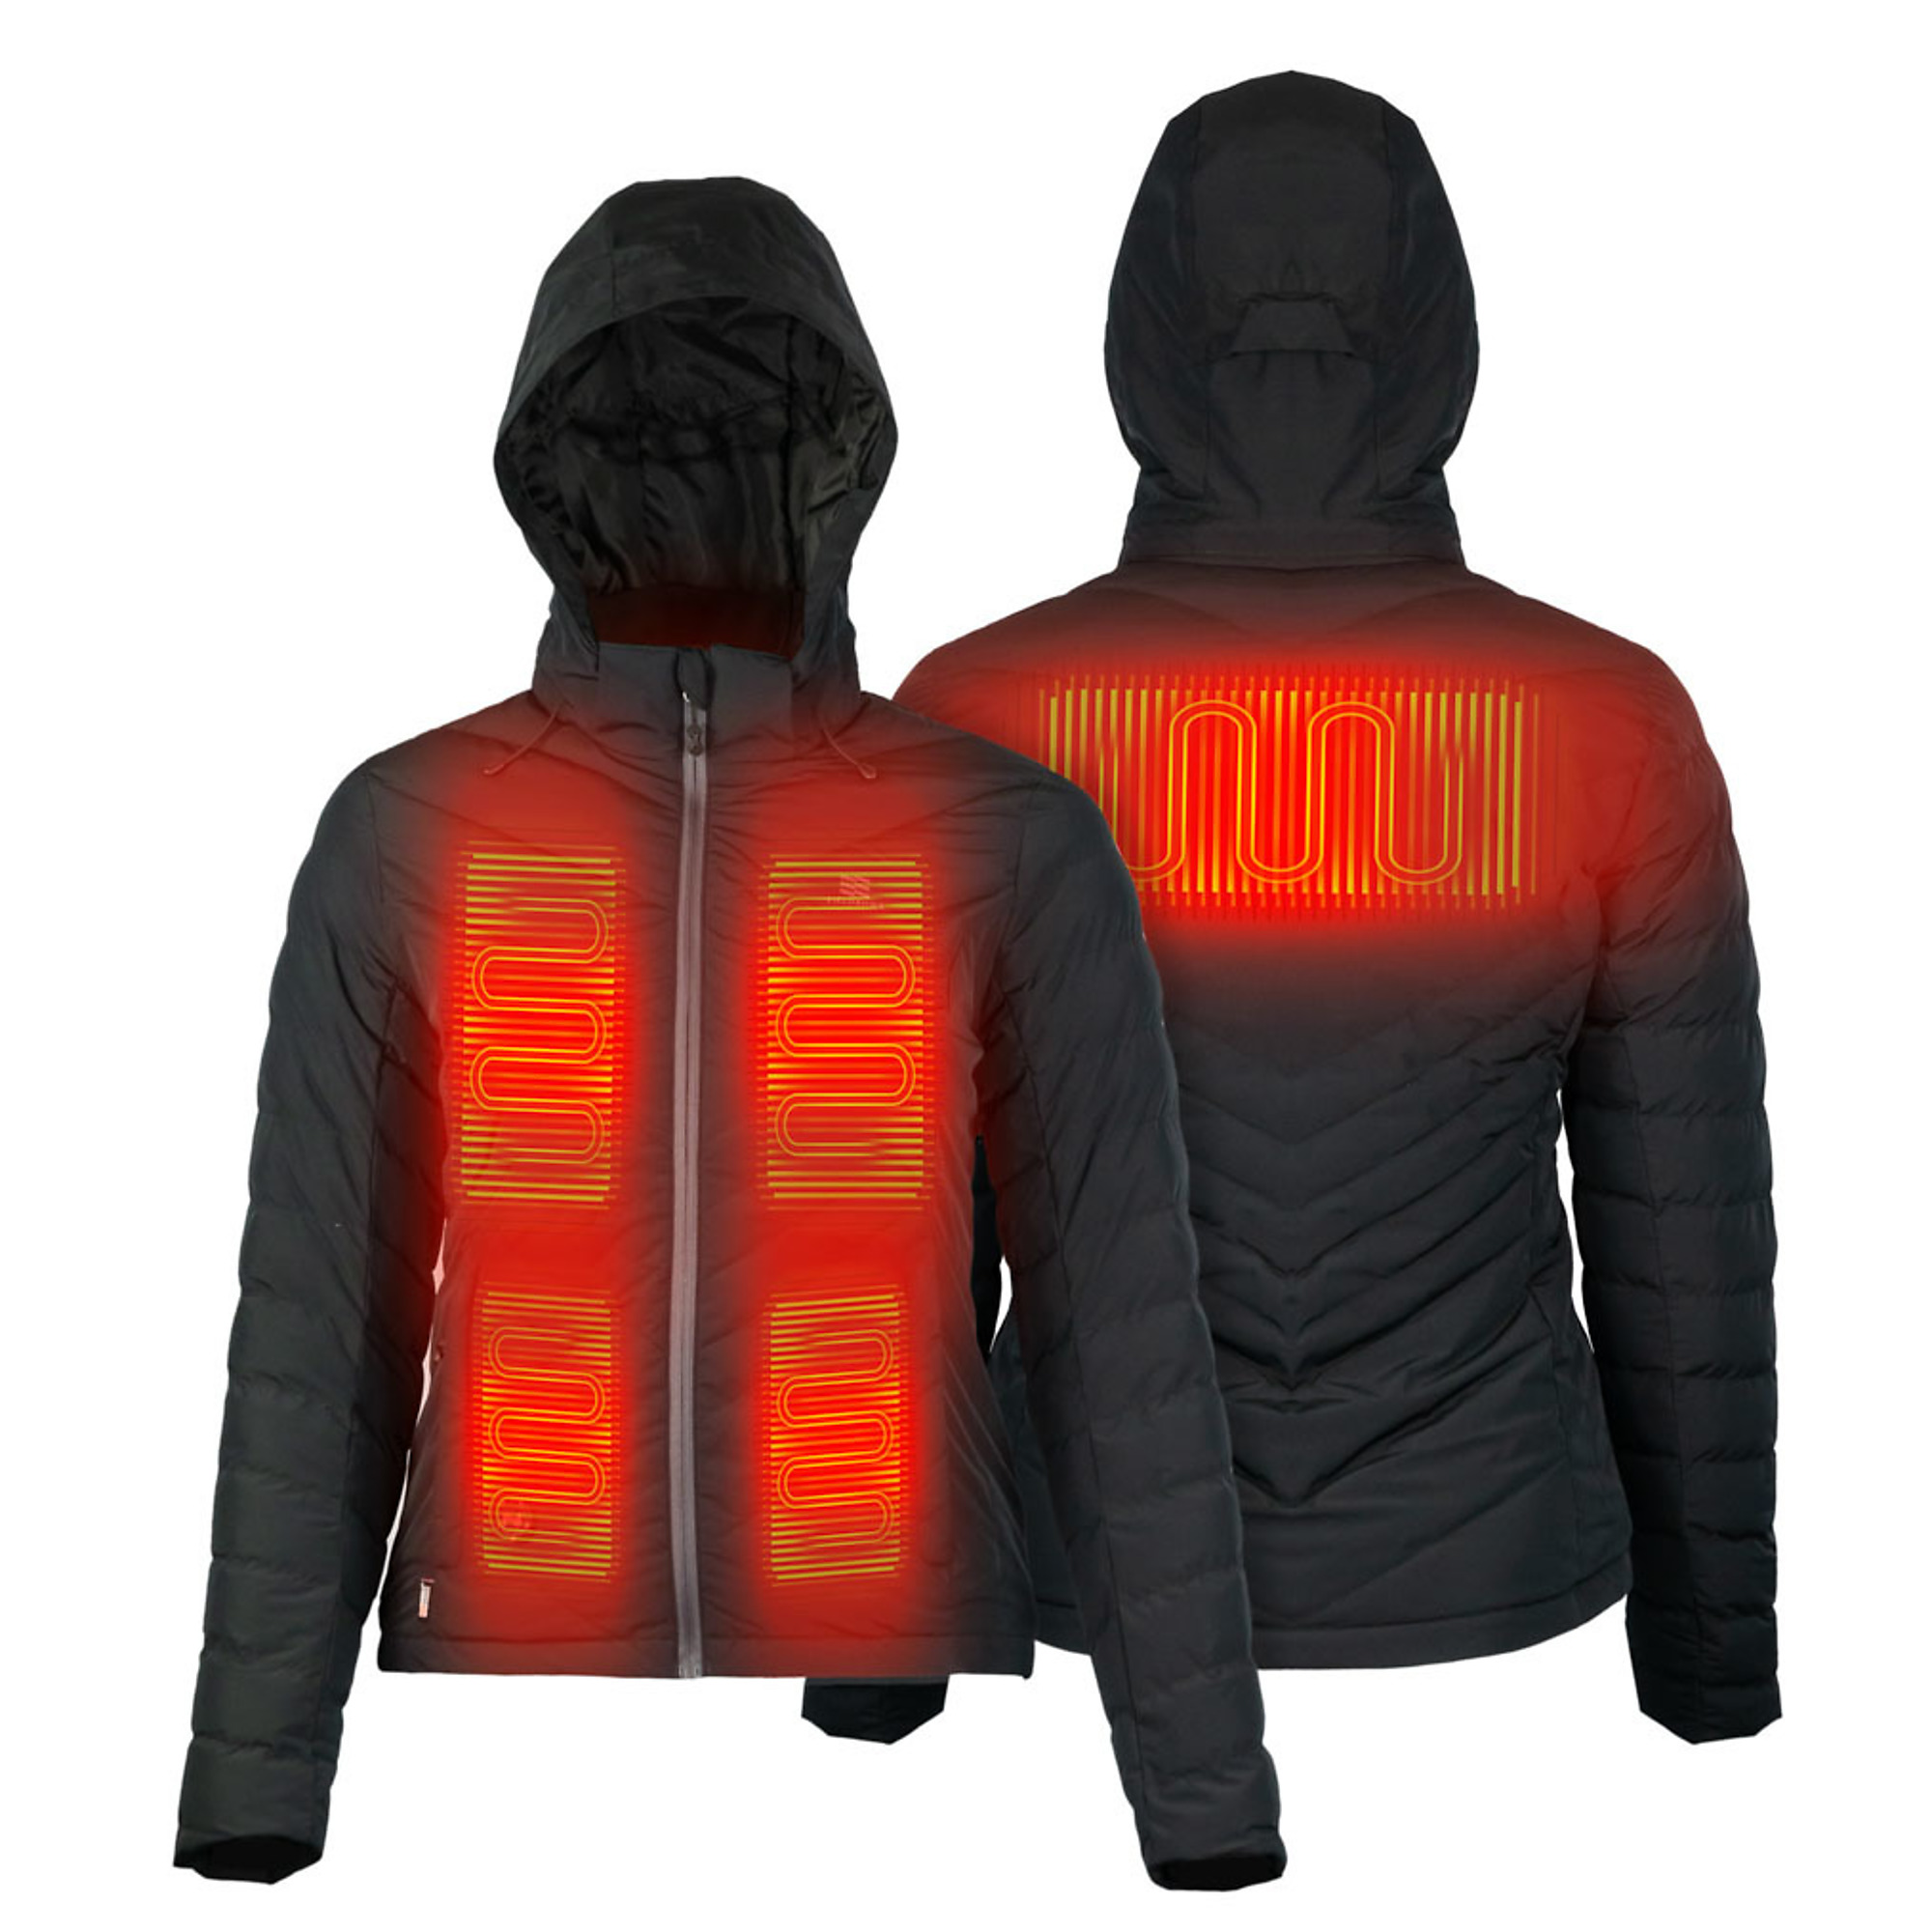 Fieldsheer, Women's Crest Heated Jacket with 7.4v Battery, Size XL, Color Black, Model MWWJ39010522